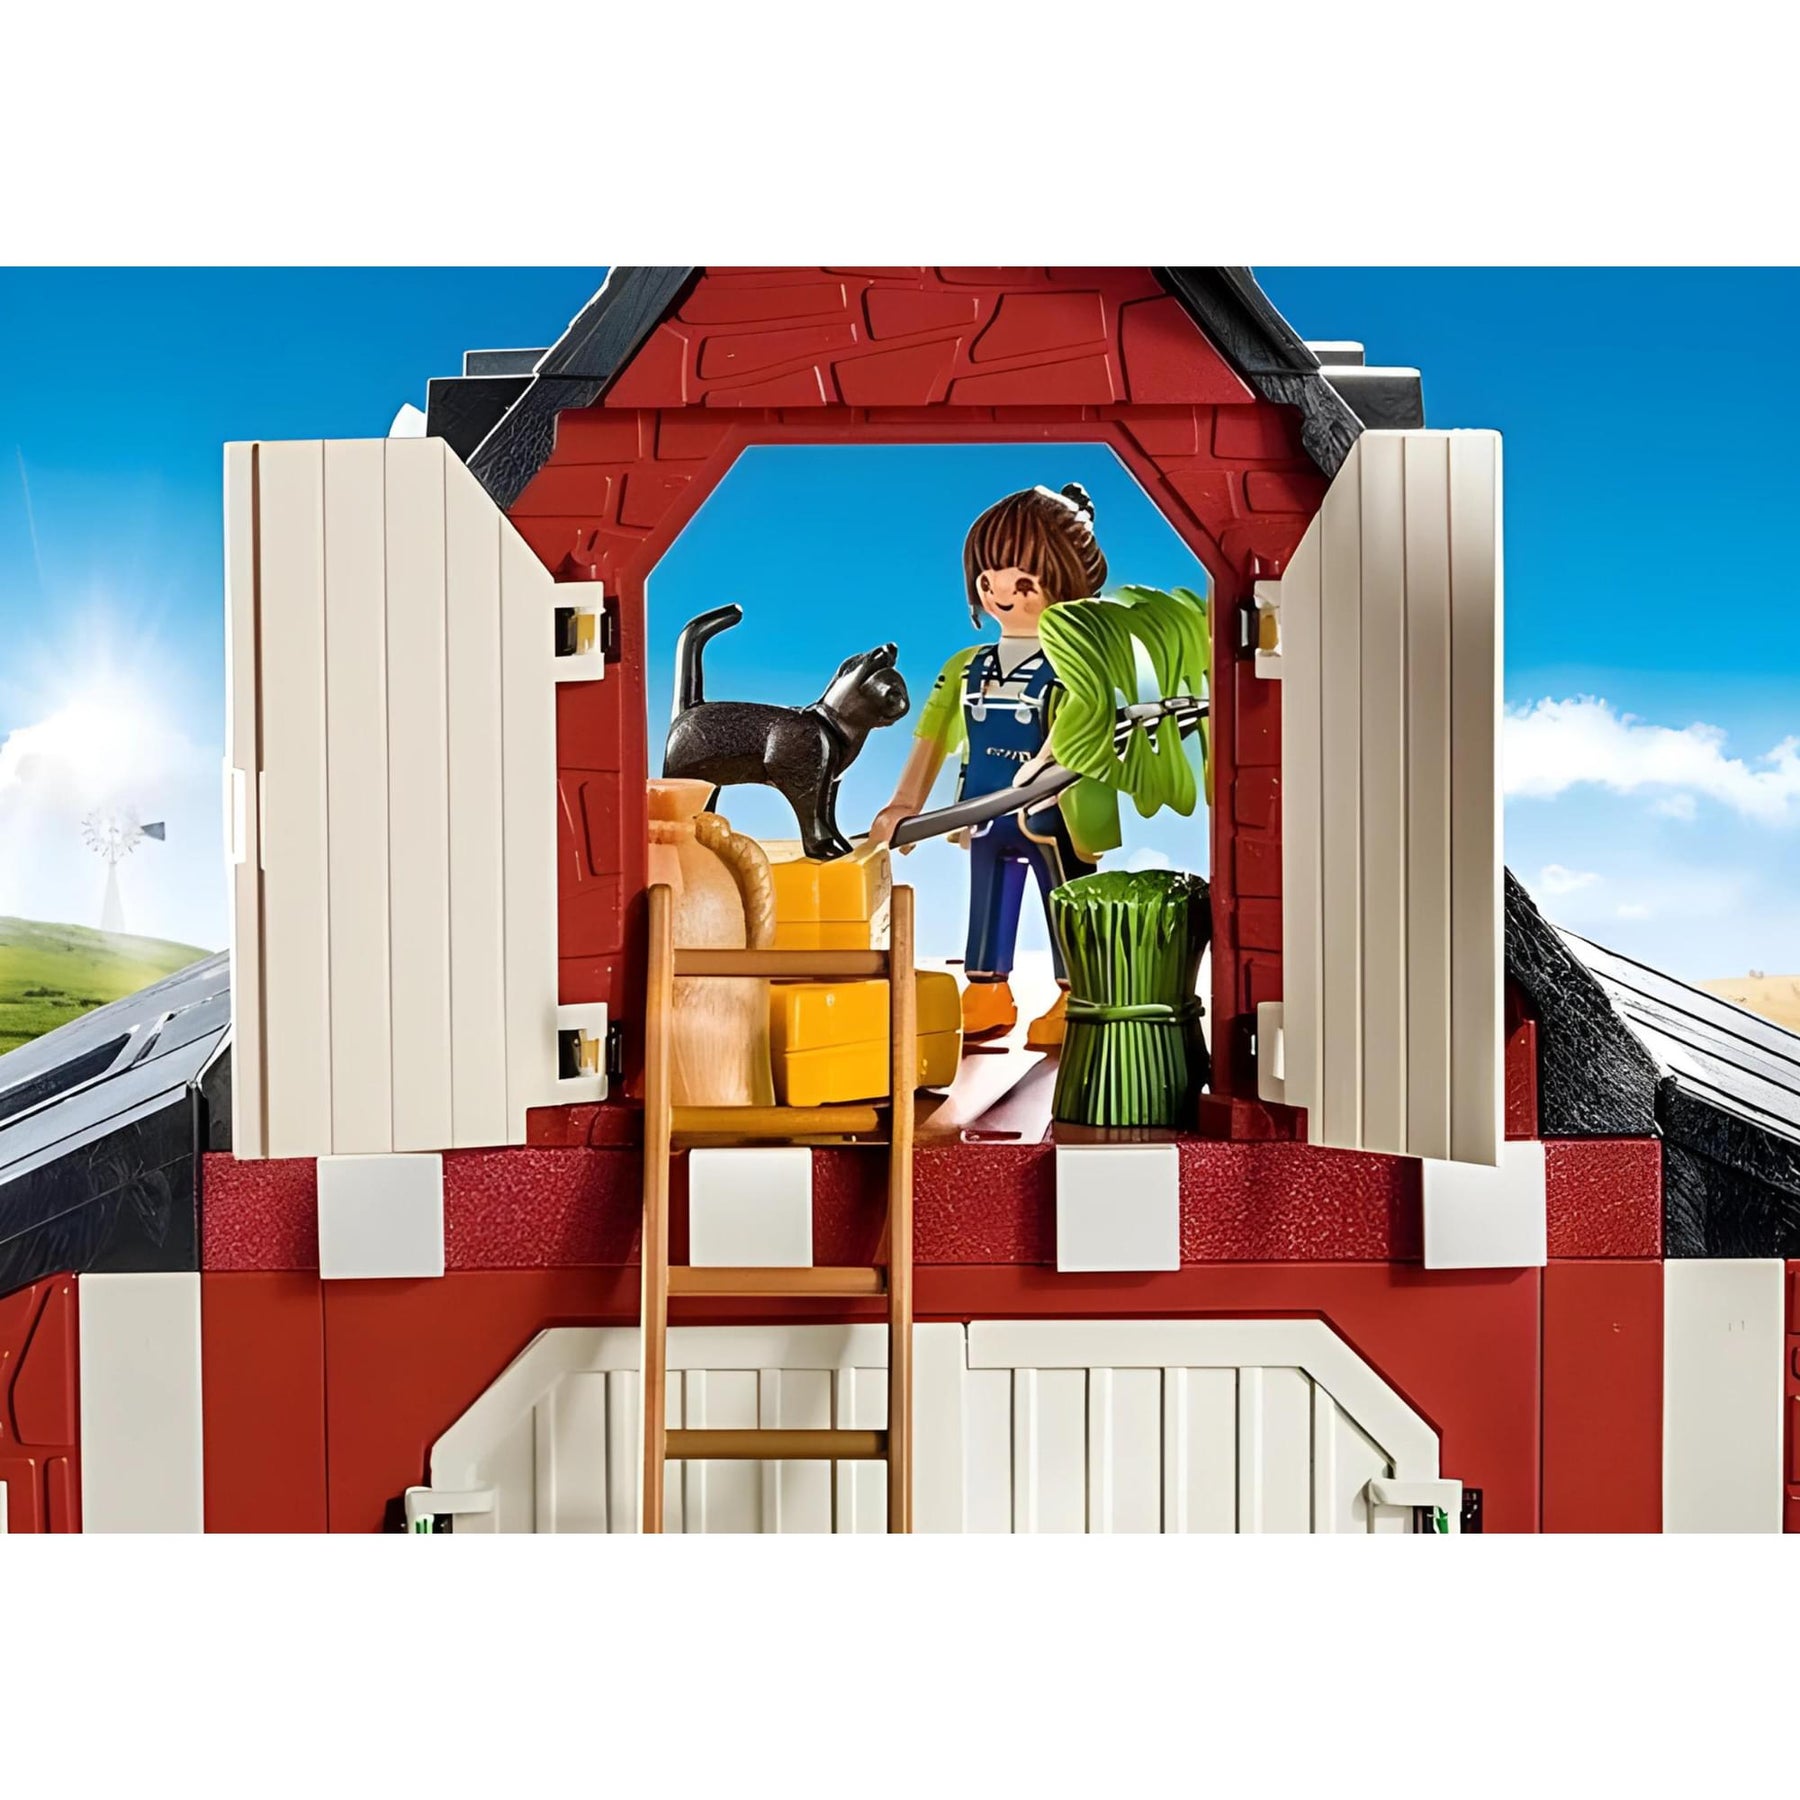 Playmobil 9315 Barn with Silo Building Set